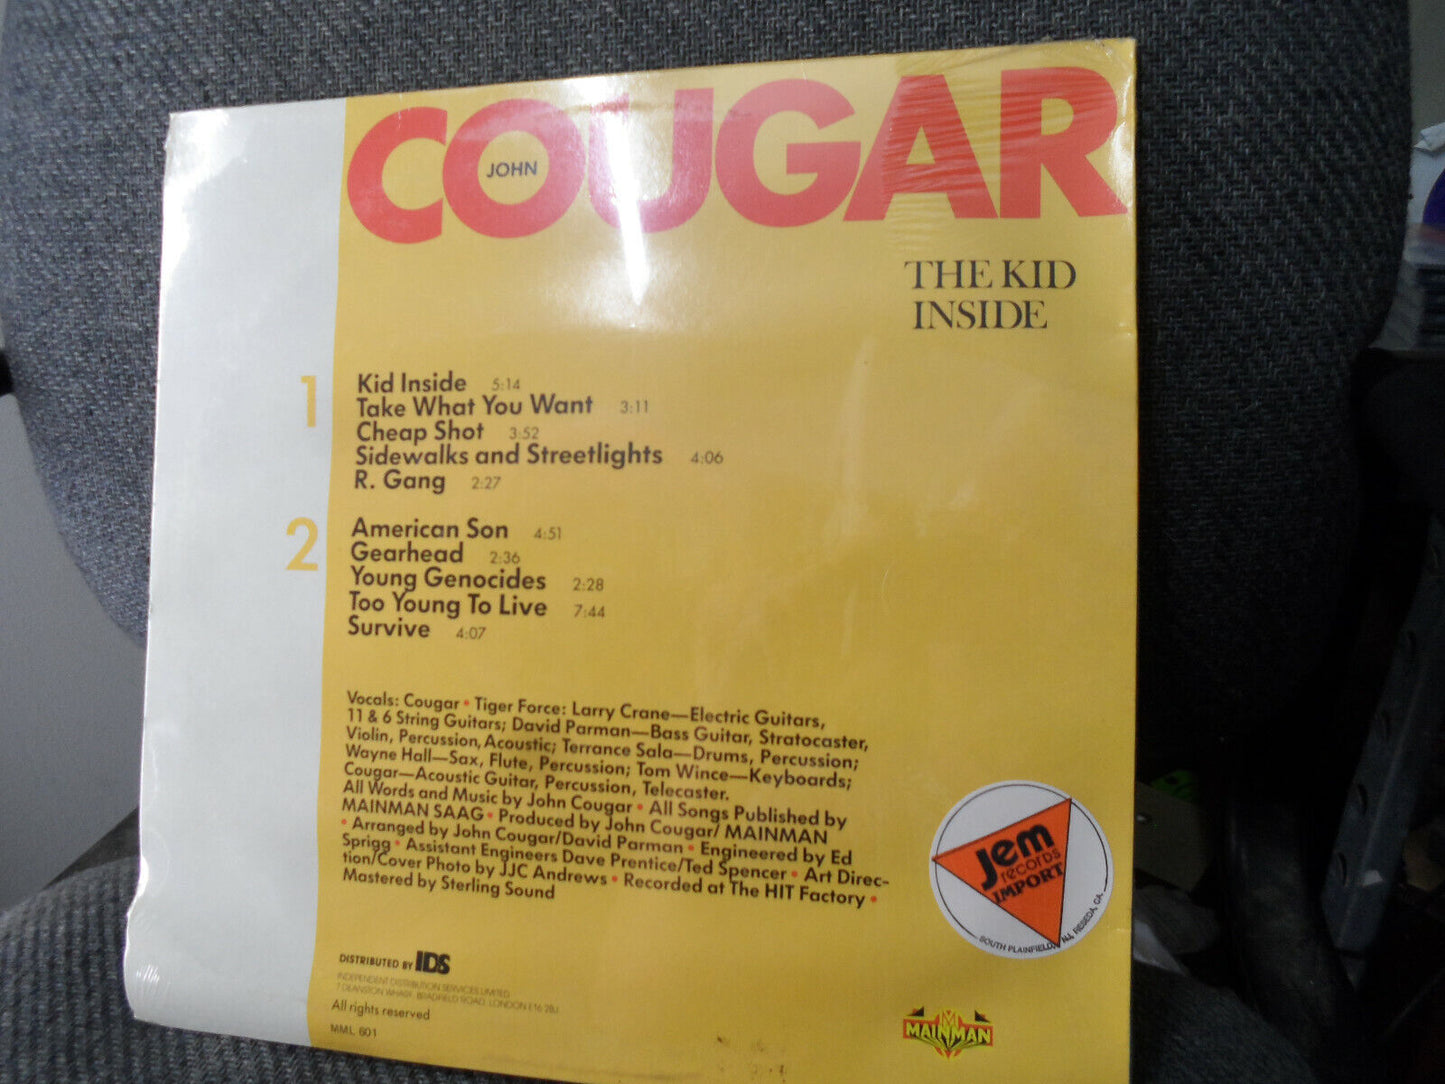 John Cougar Mellencamp Import LP - Original SEALED